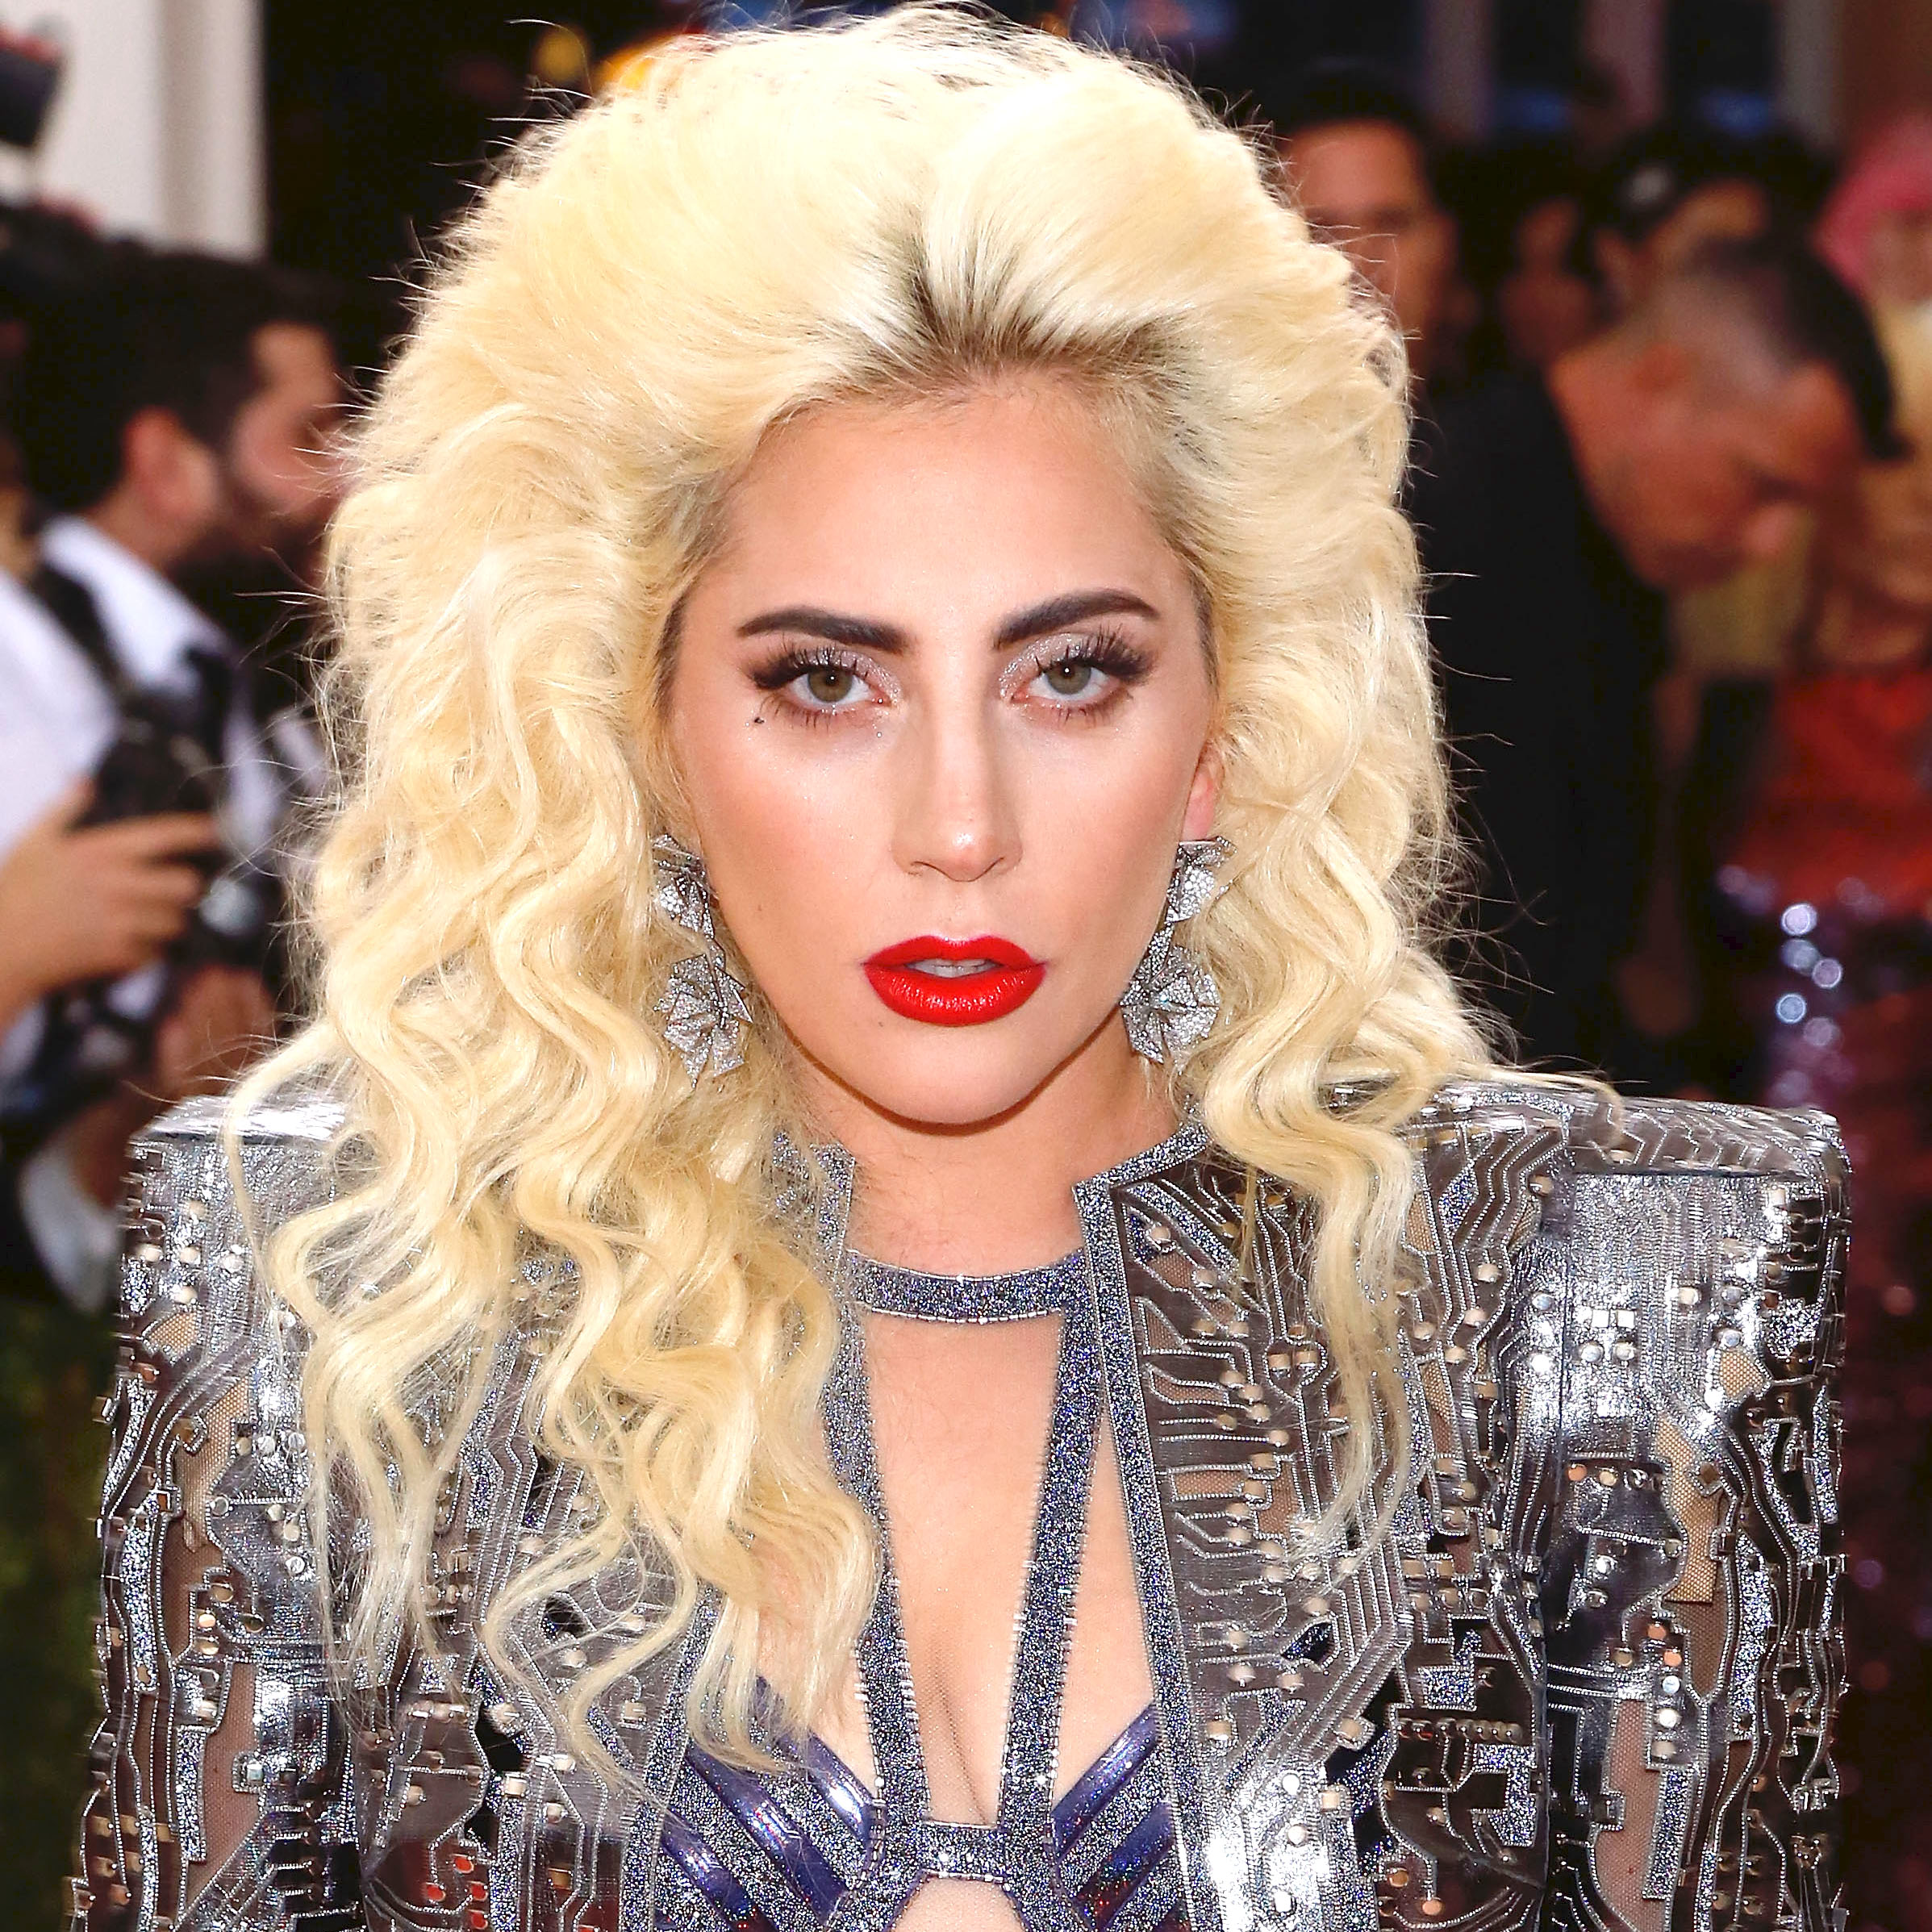 Khloé Kardashian, Lady Gaga, and More Stars Shocking Sex Toy Confessions